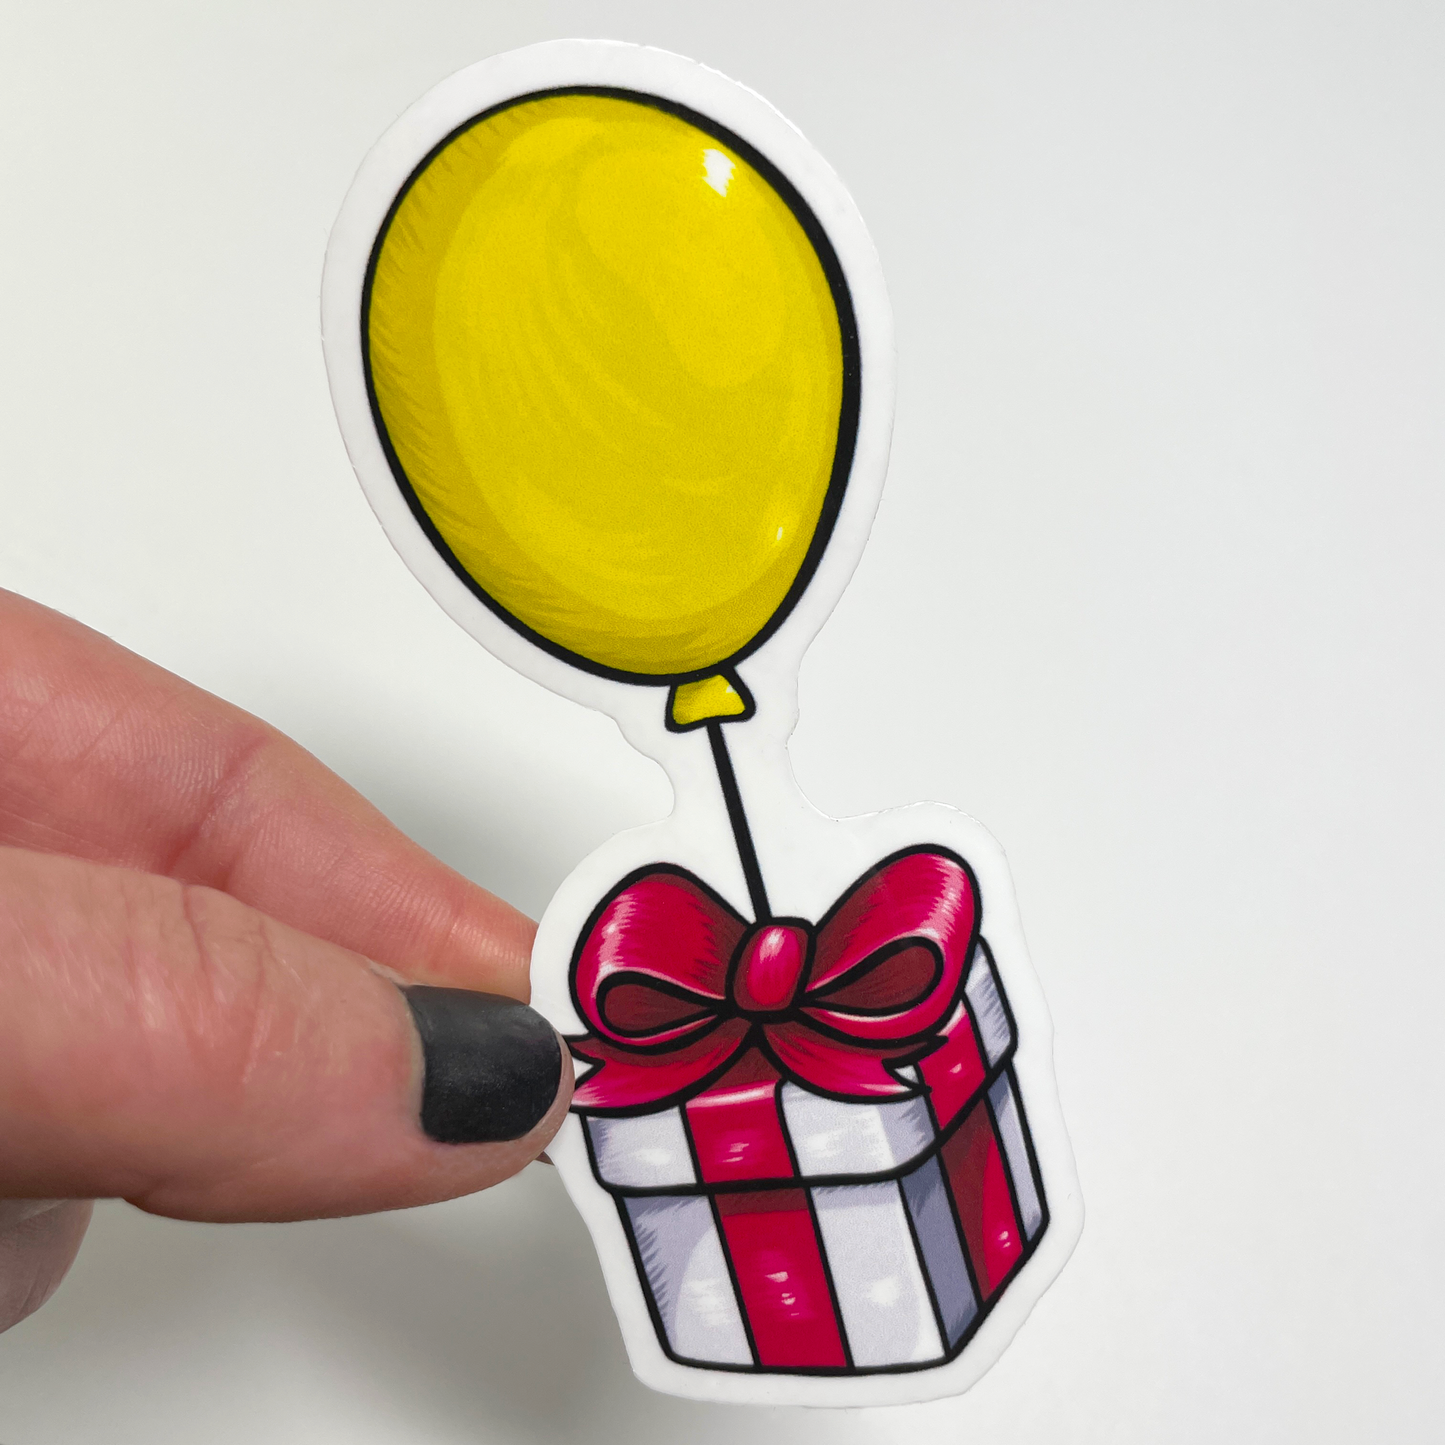 Animal Crossing Balloon Present Stickers